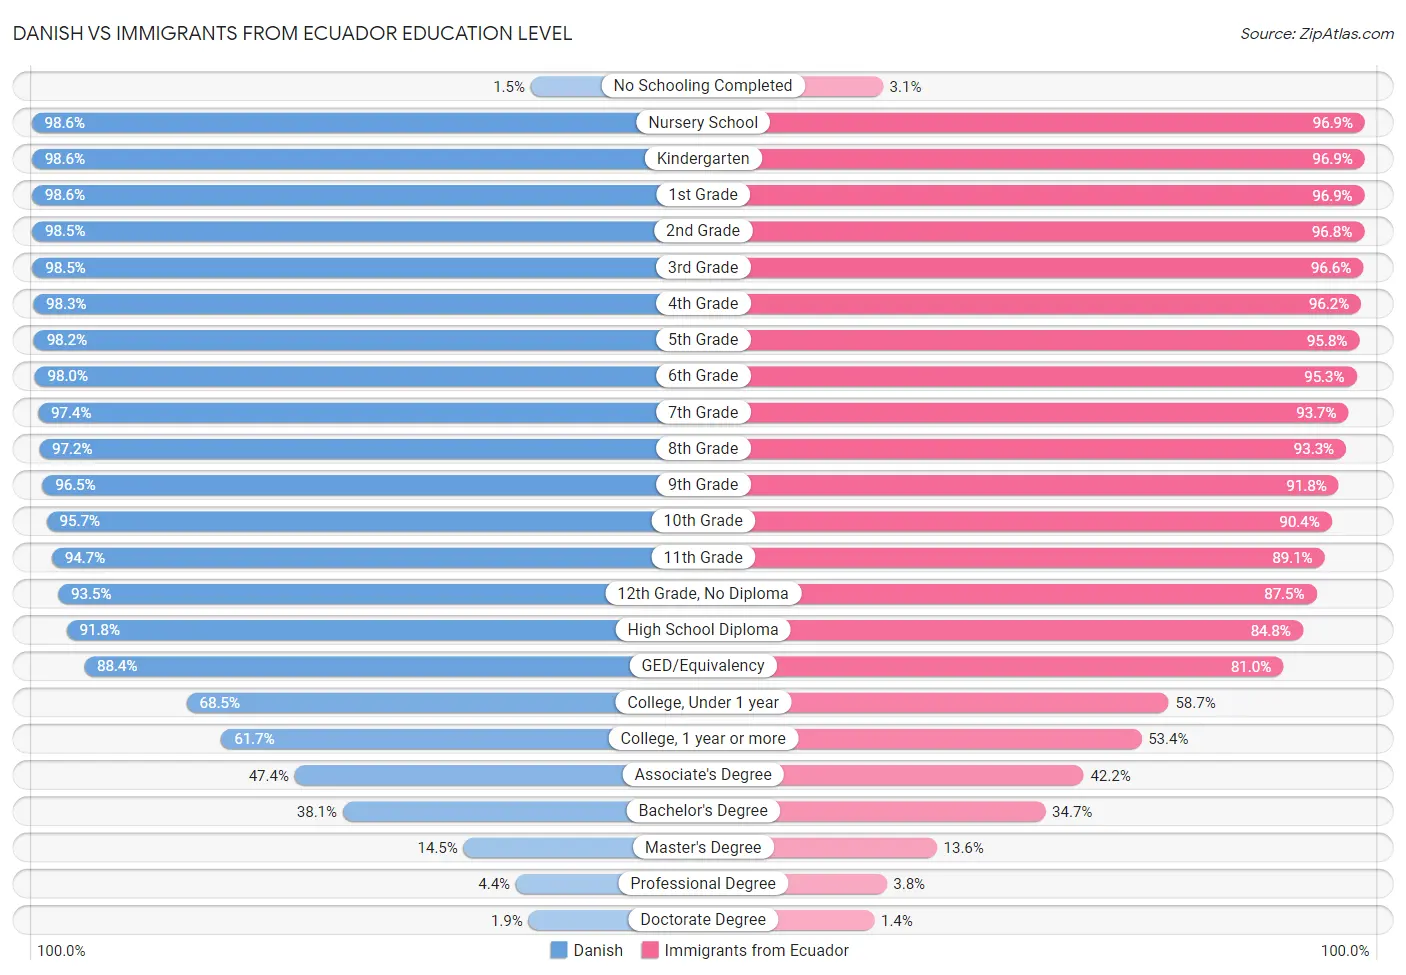 Danish vs Immigrants from Ecuador Education Level